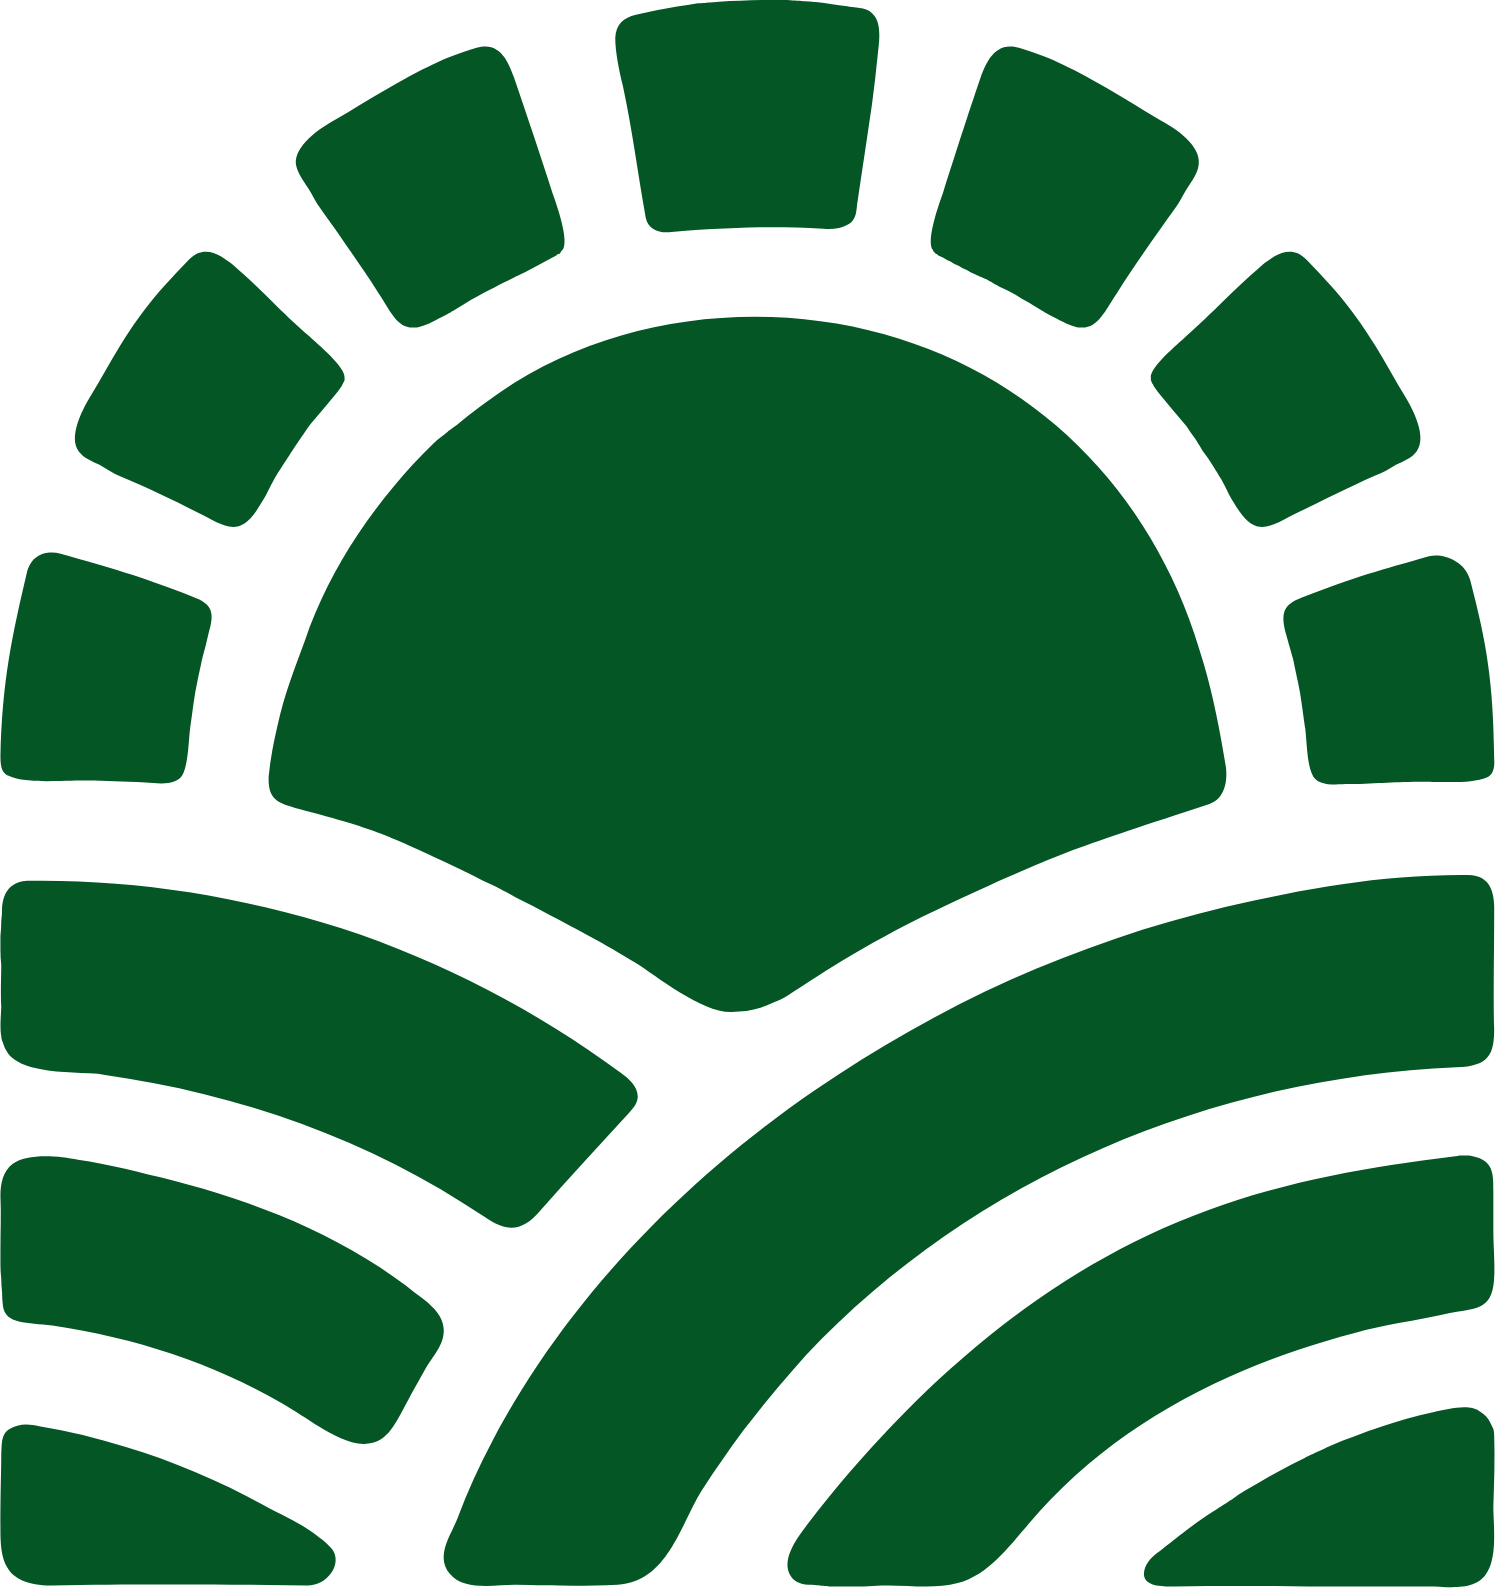 Green Thumb Industries logo (PNG transparent)